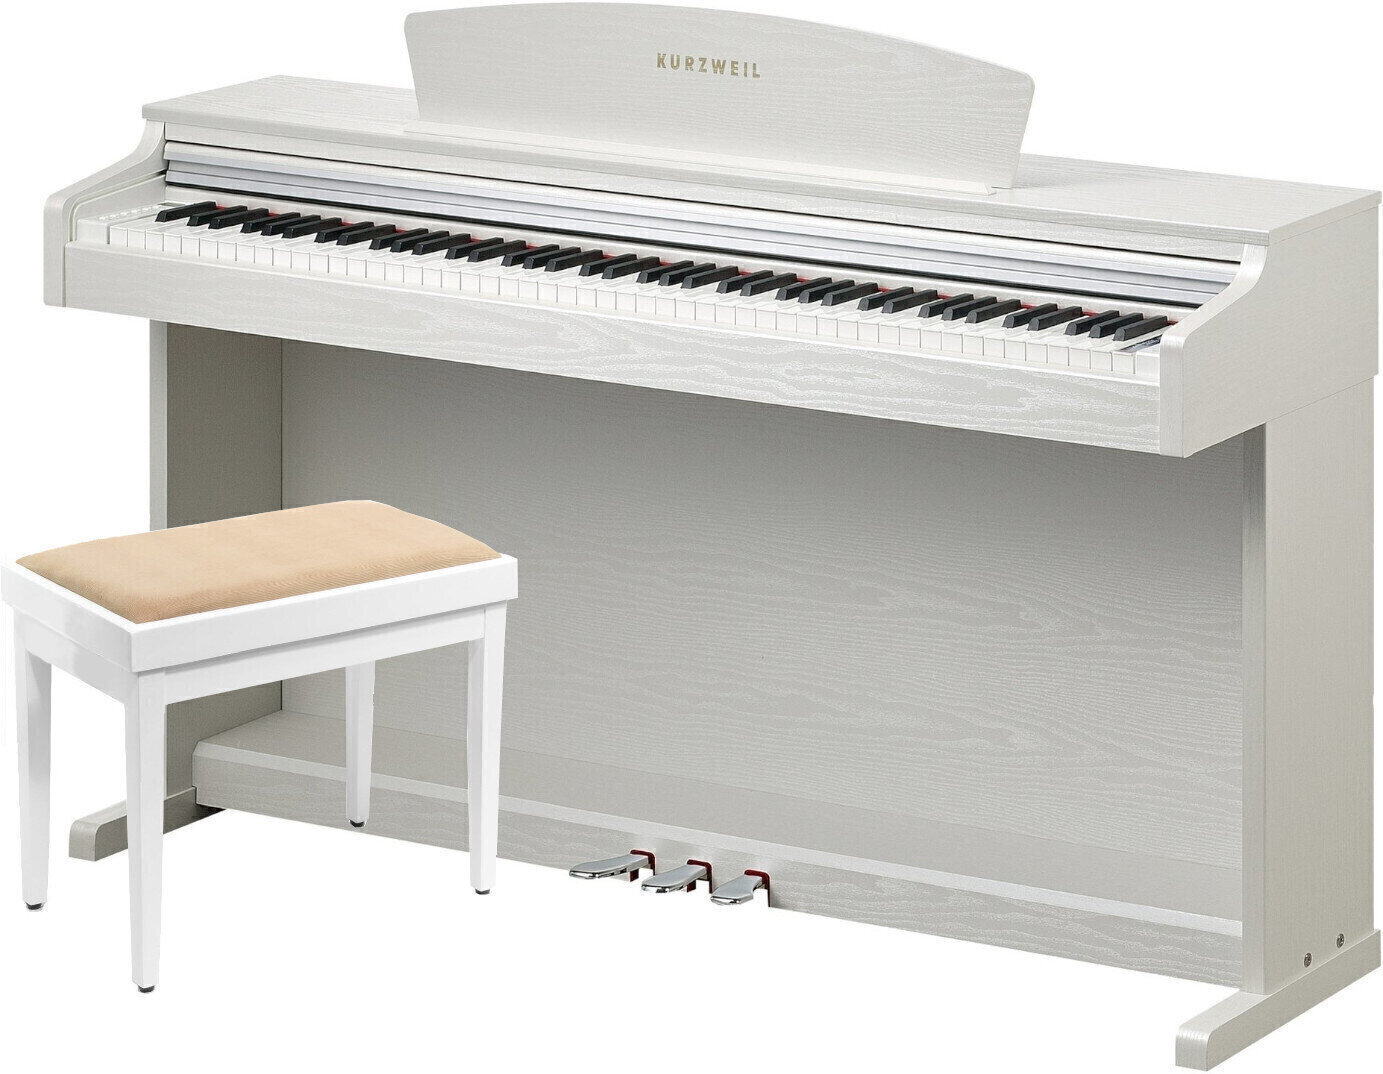 Digital Piano Kurzweil M110A White Digital Piano